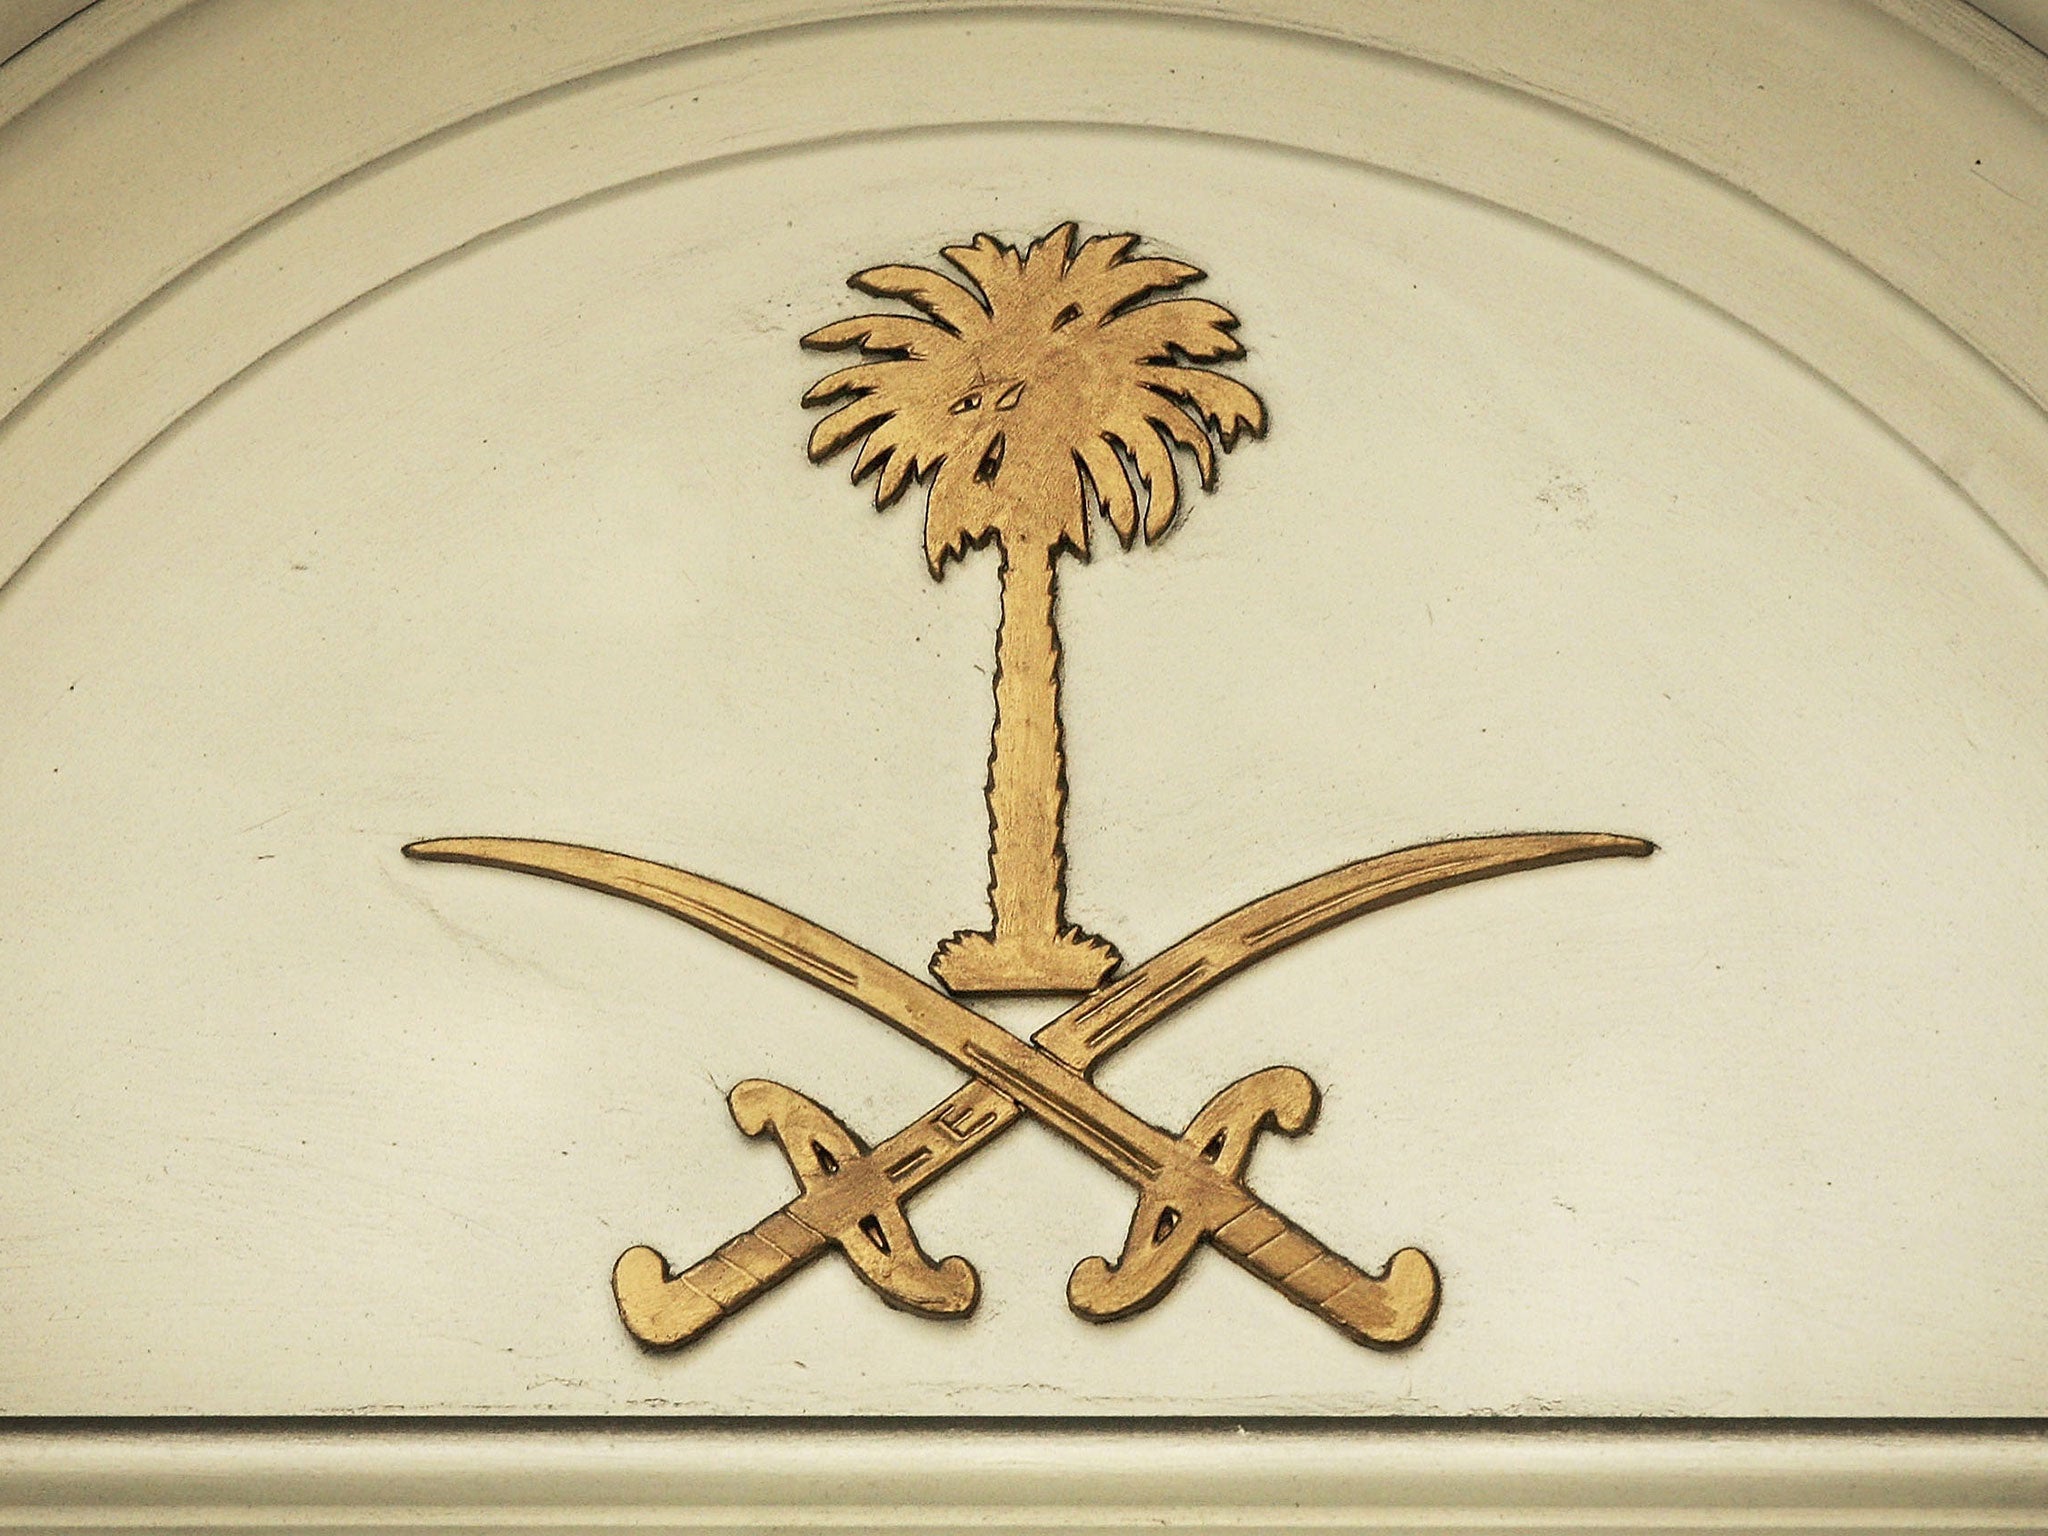 The Saudi royal crest